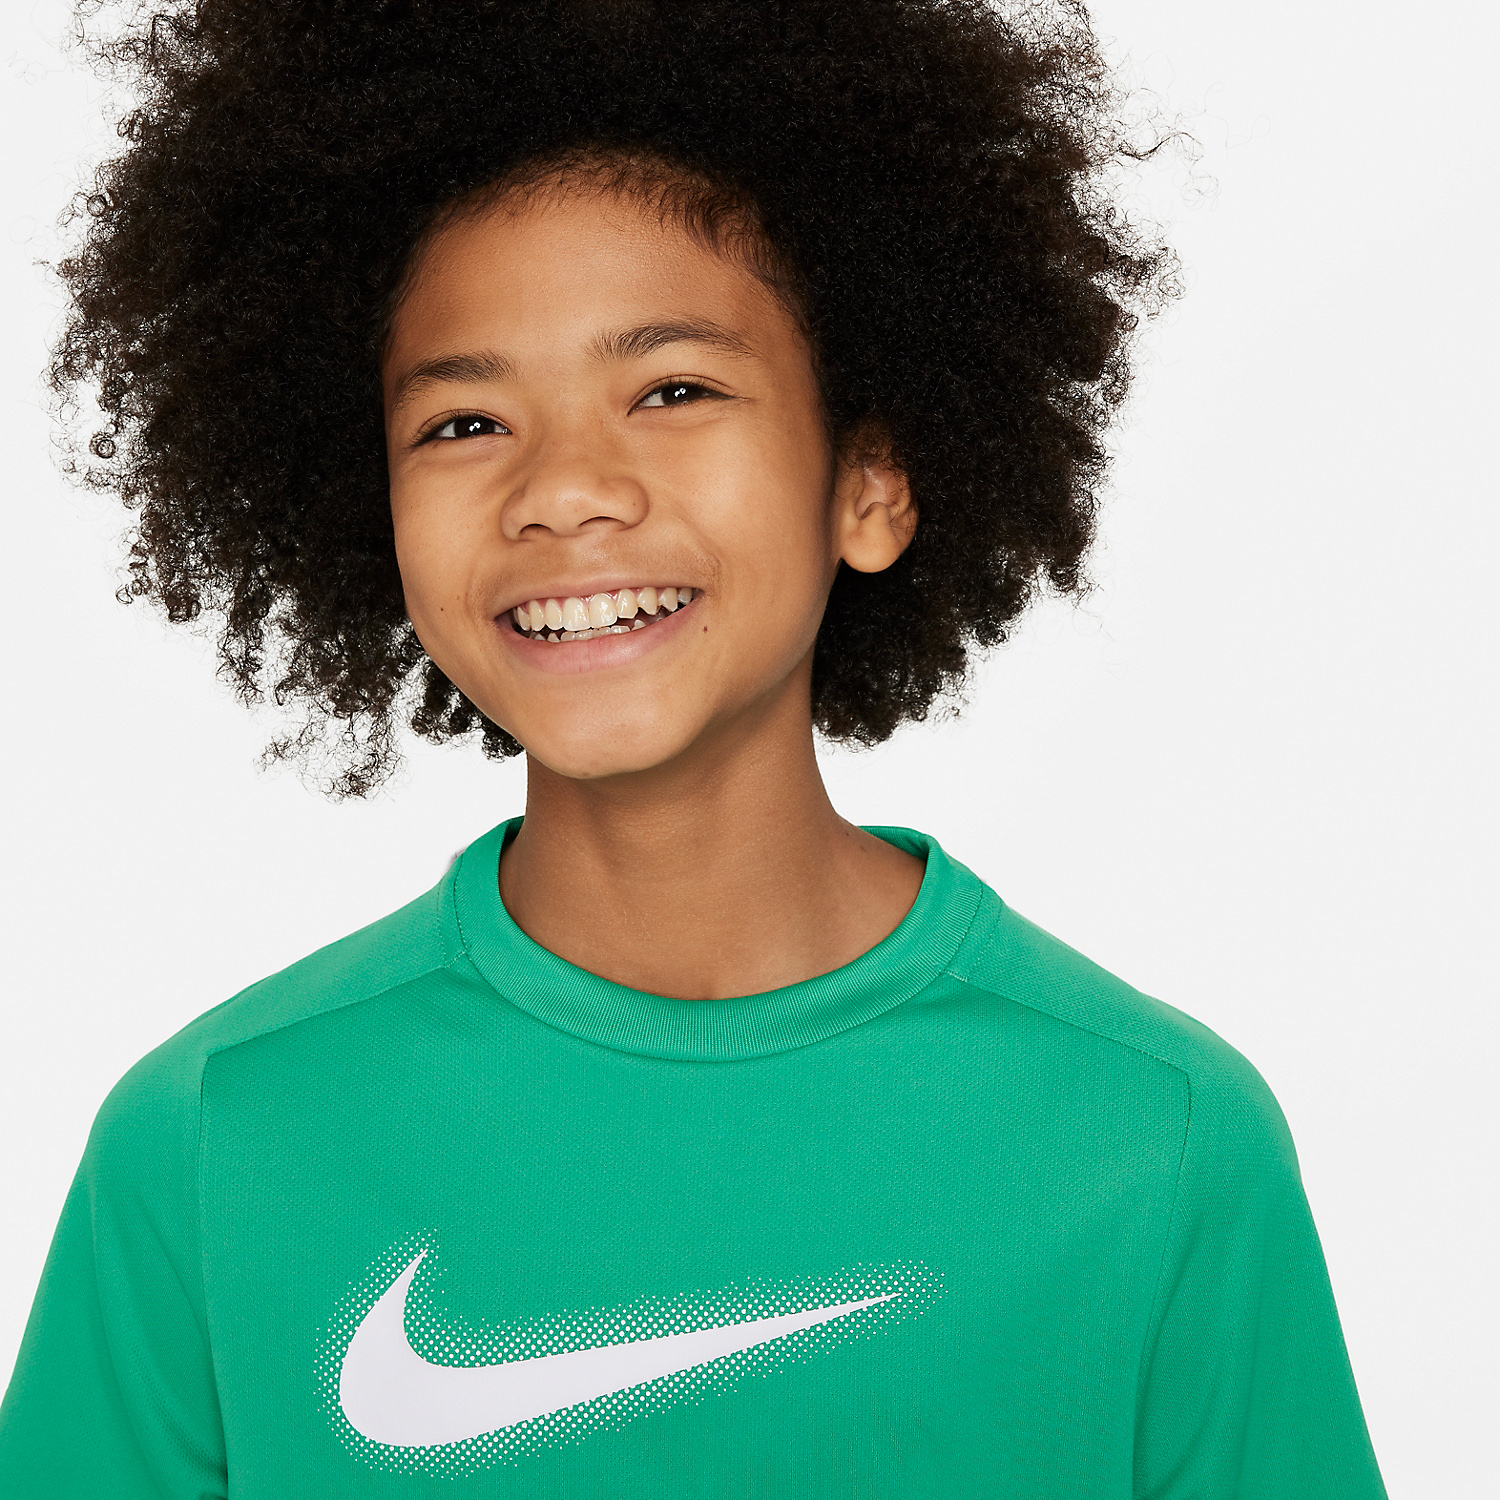 Nike Dri-FIT Icon T-Shirt Boy - Stadium Green/White